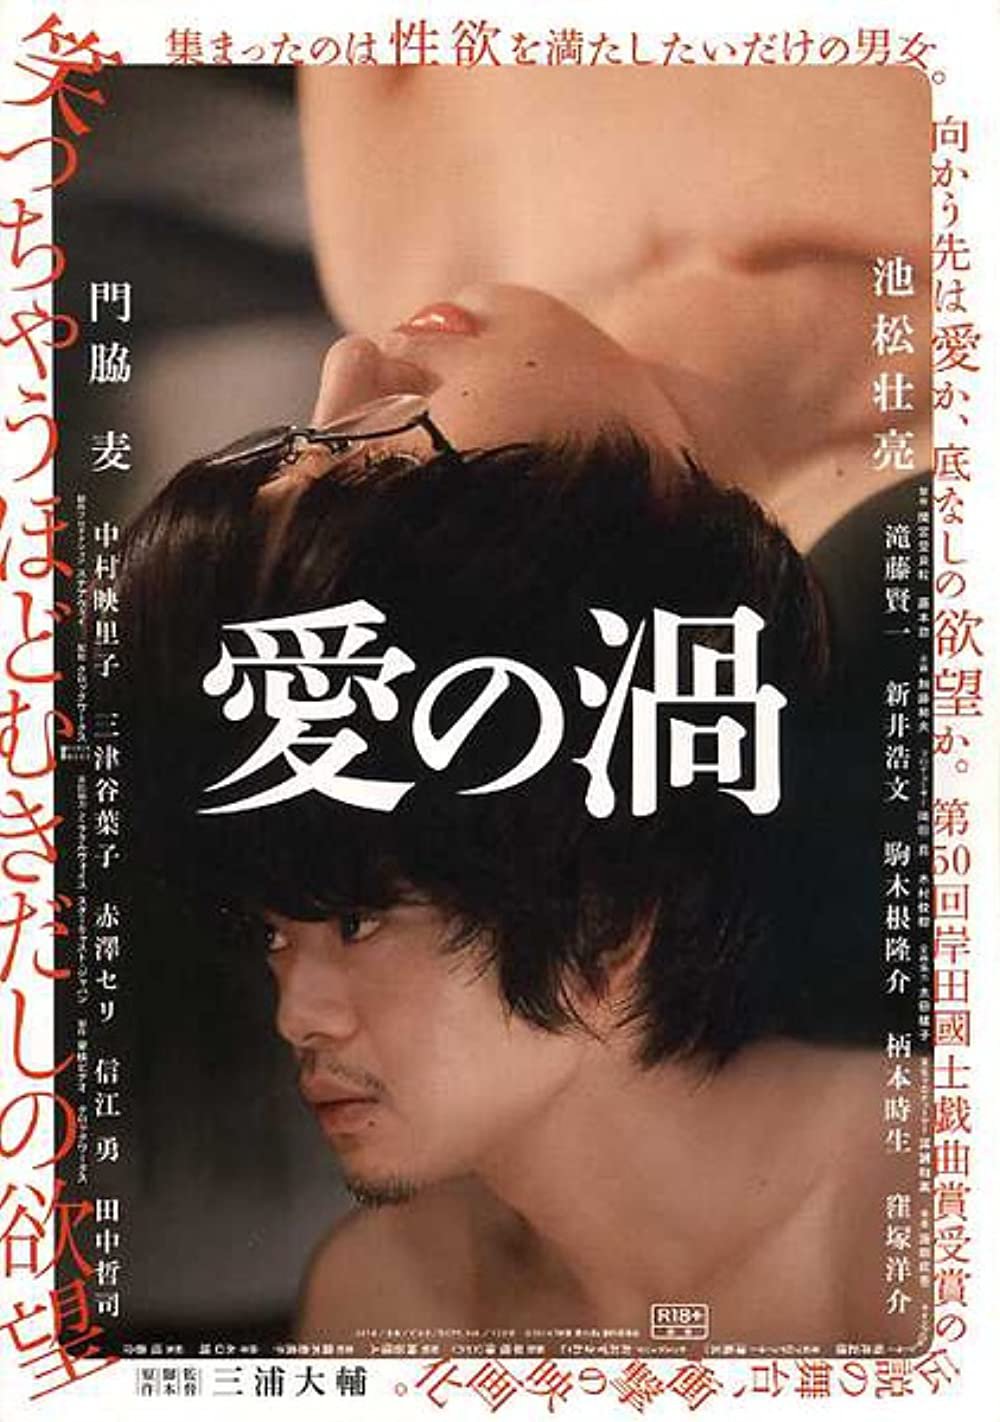 Erotic films japanese